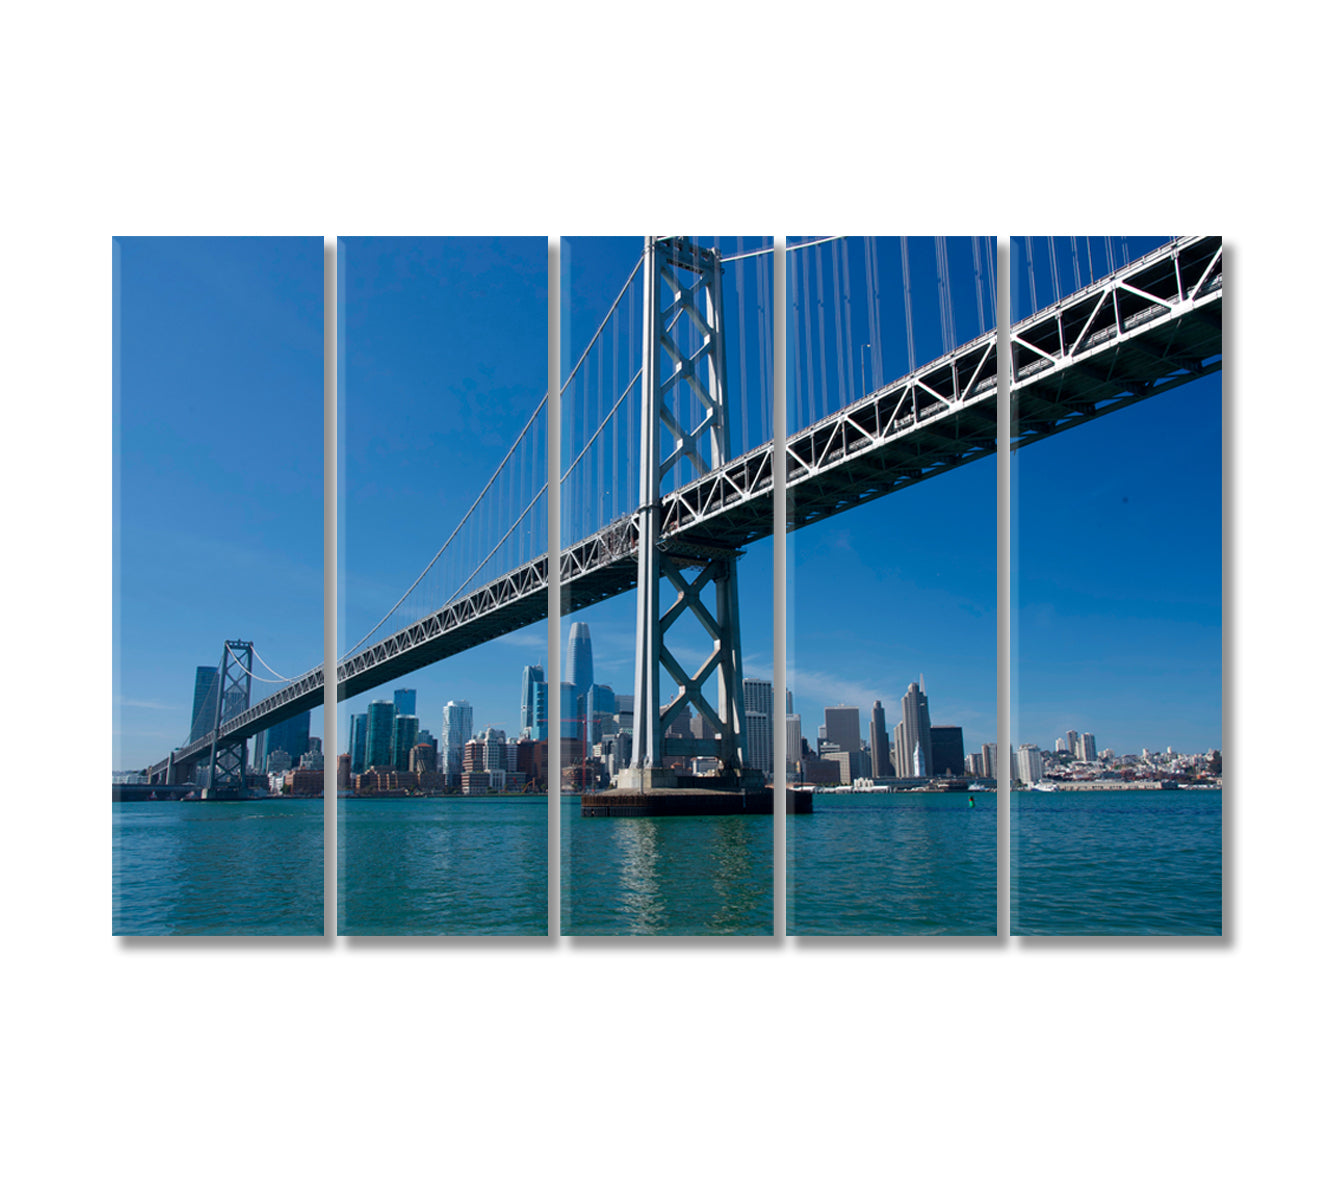 Golden Gate Bridge over San Francisco Bay Canvas Print-Canvas Print-CetArt-5 Panels-36x24 inches-CetArt